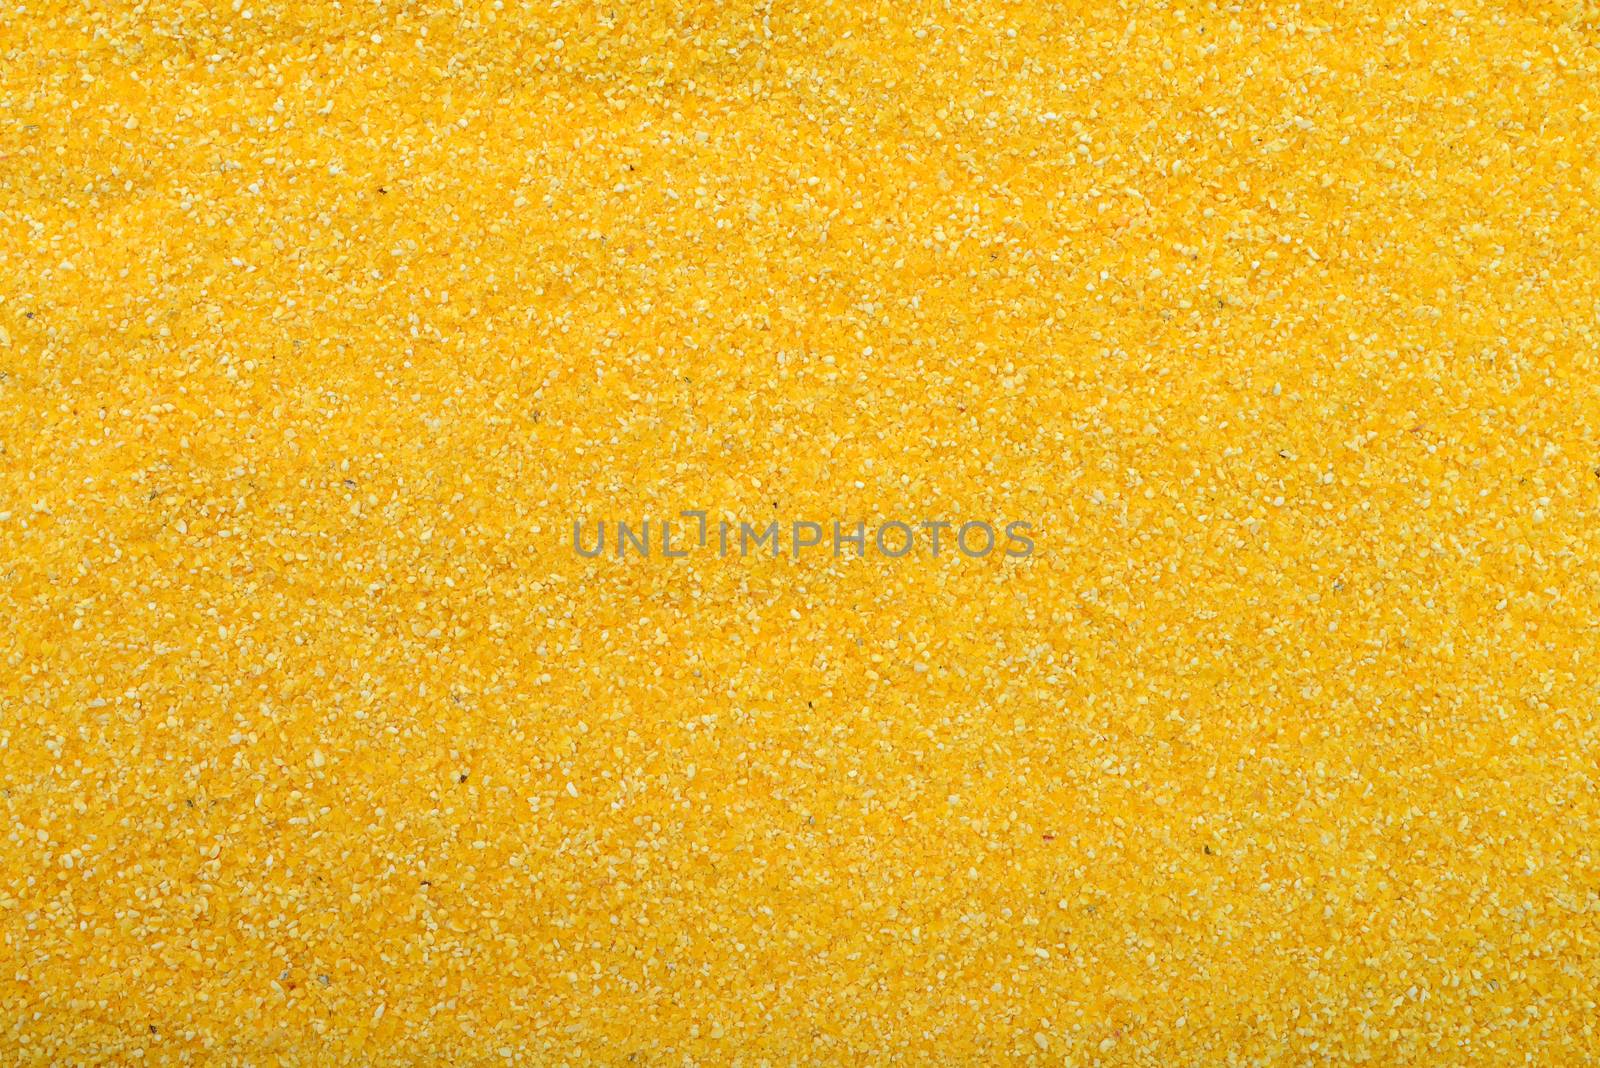 Corn flour texture by tony4urban